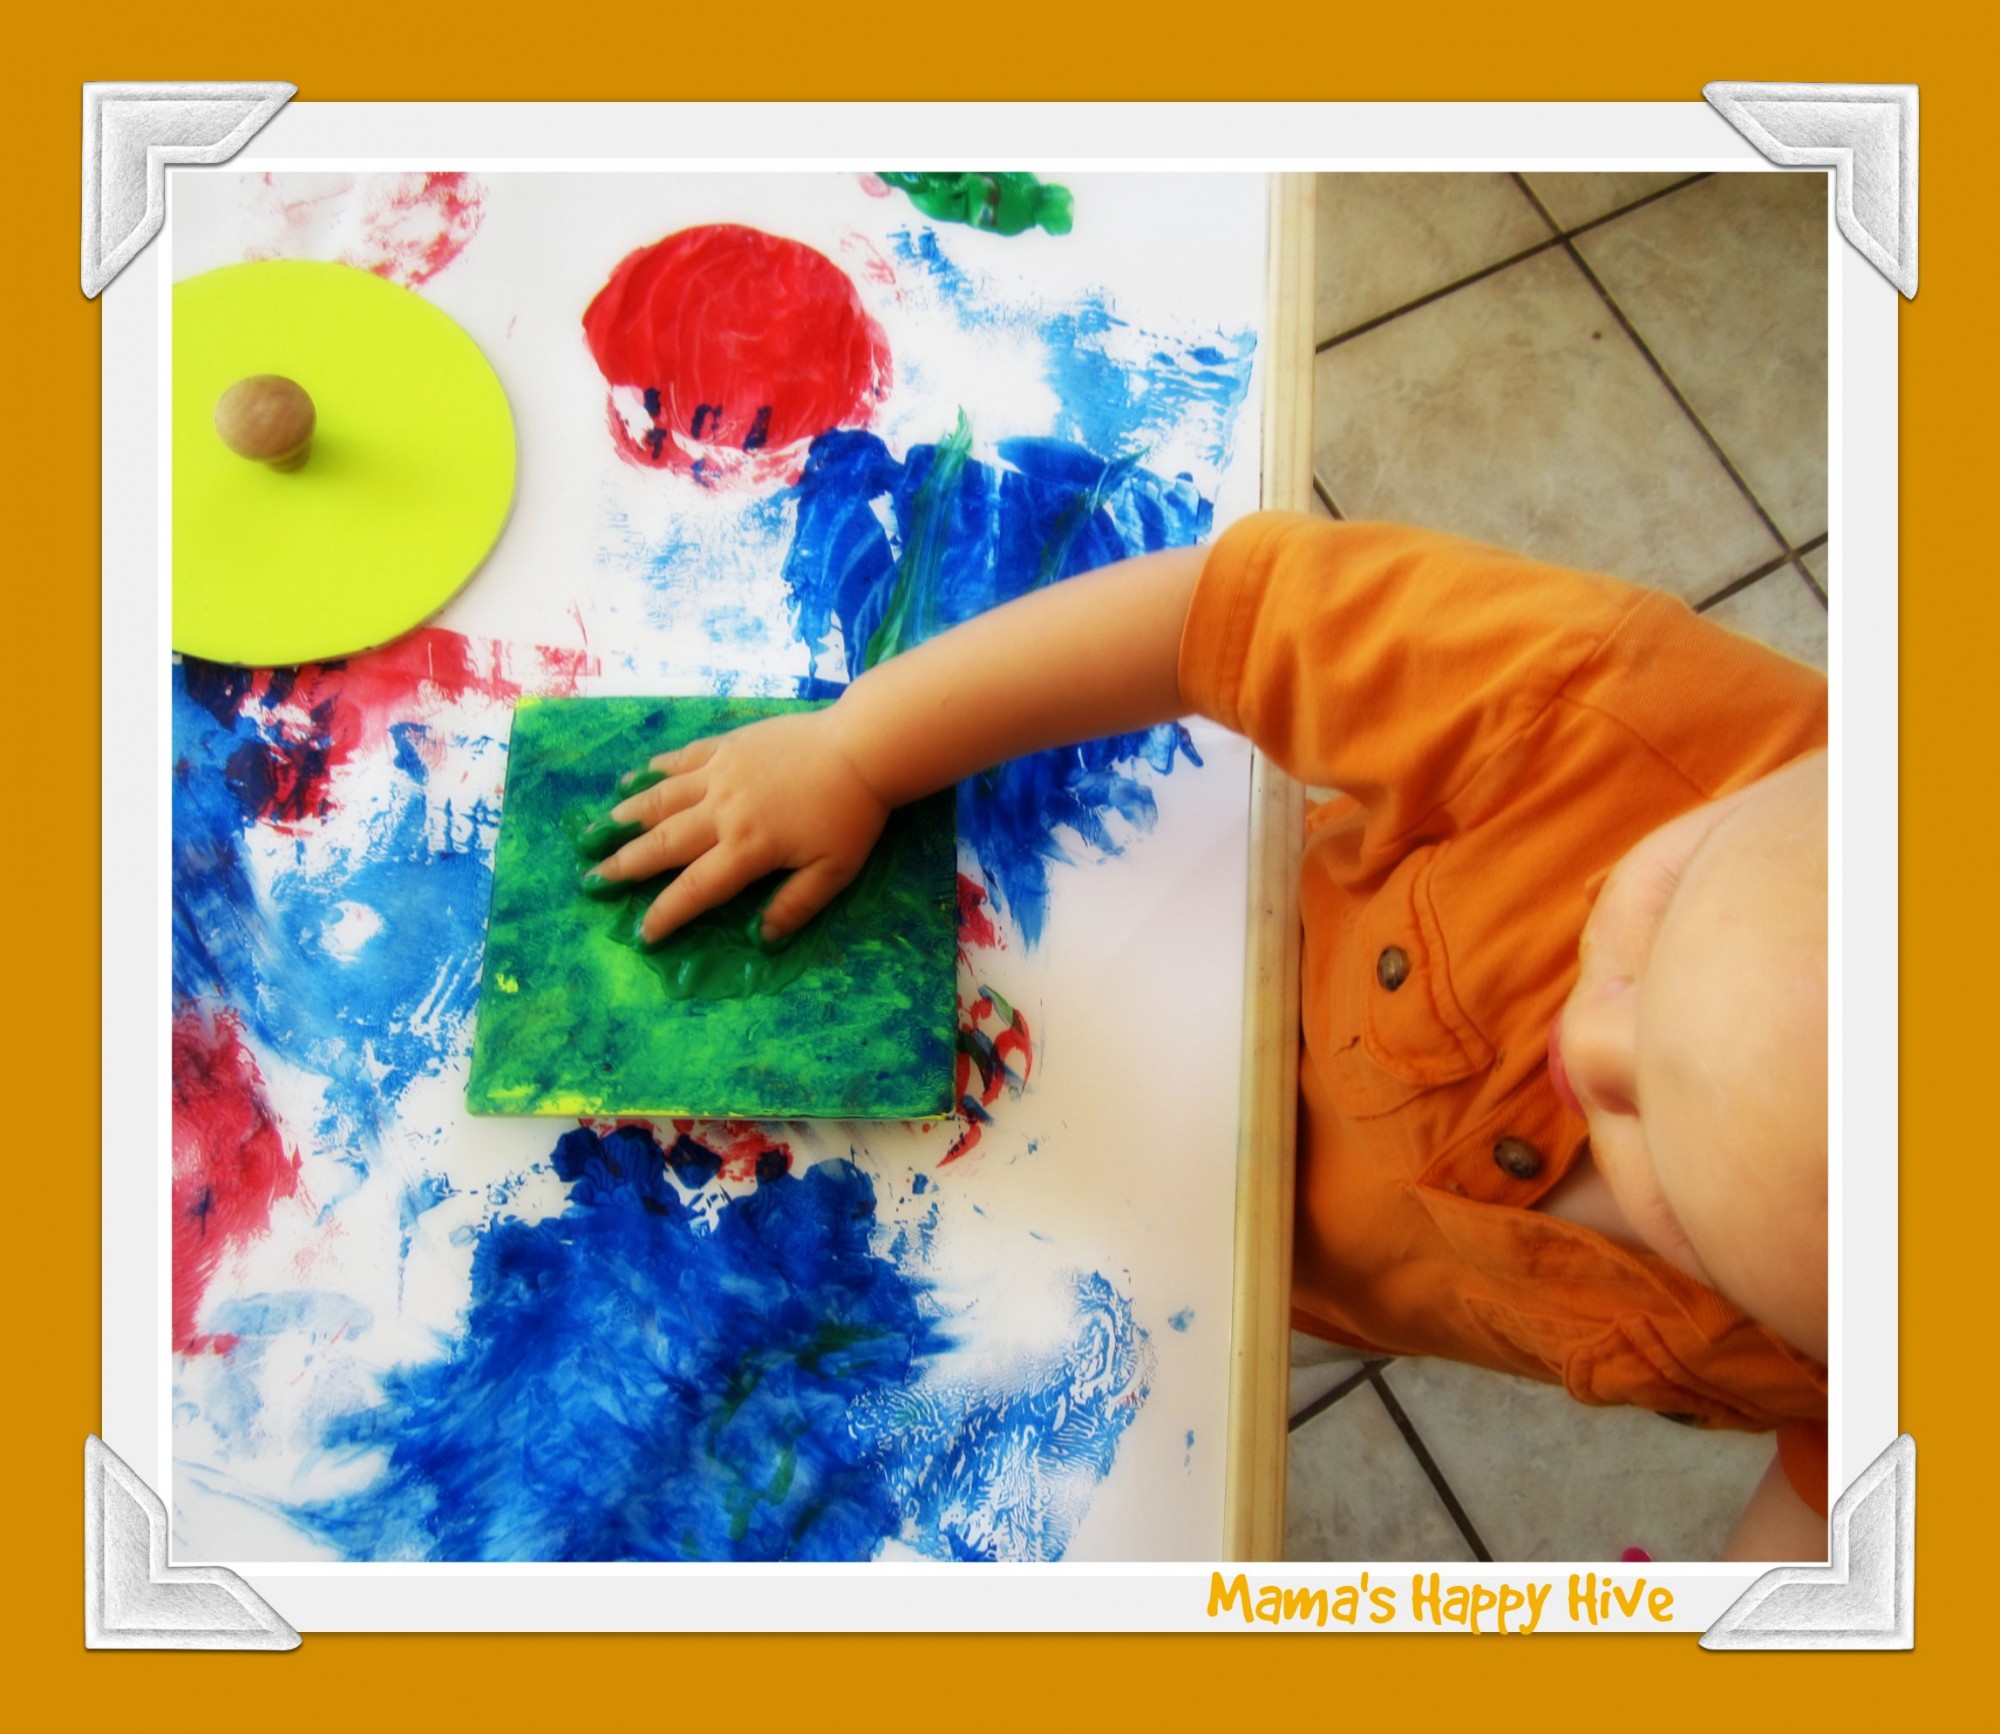 Toddler Montessori Shape Lessons - www.mamashappyhive.com